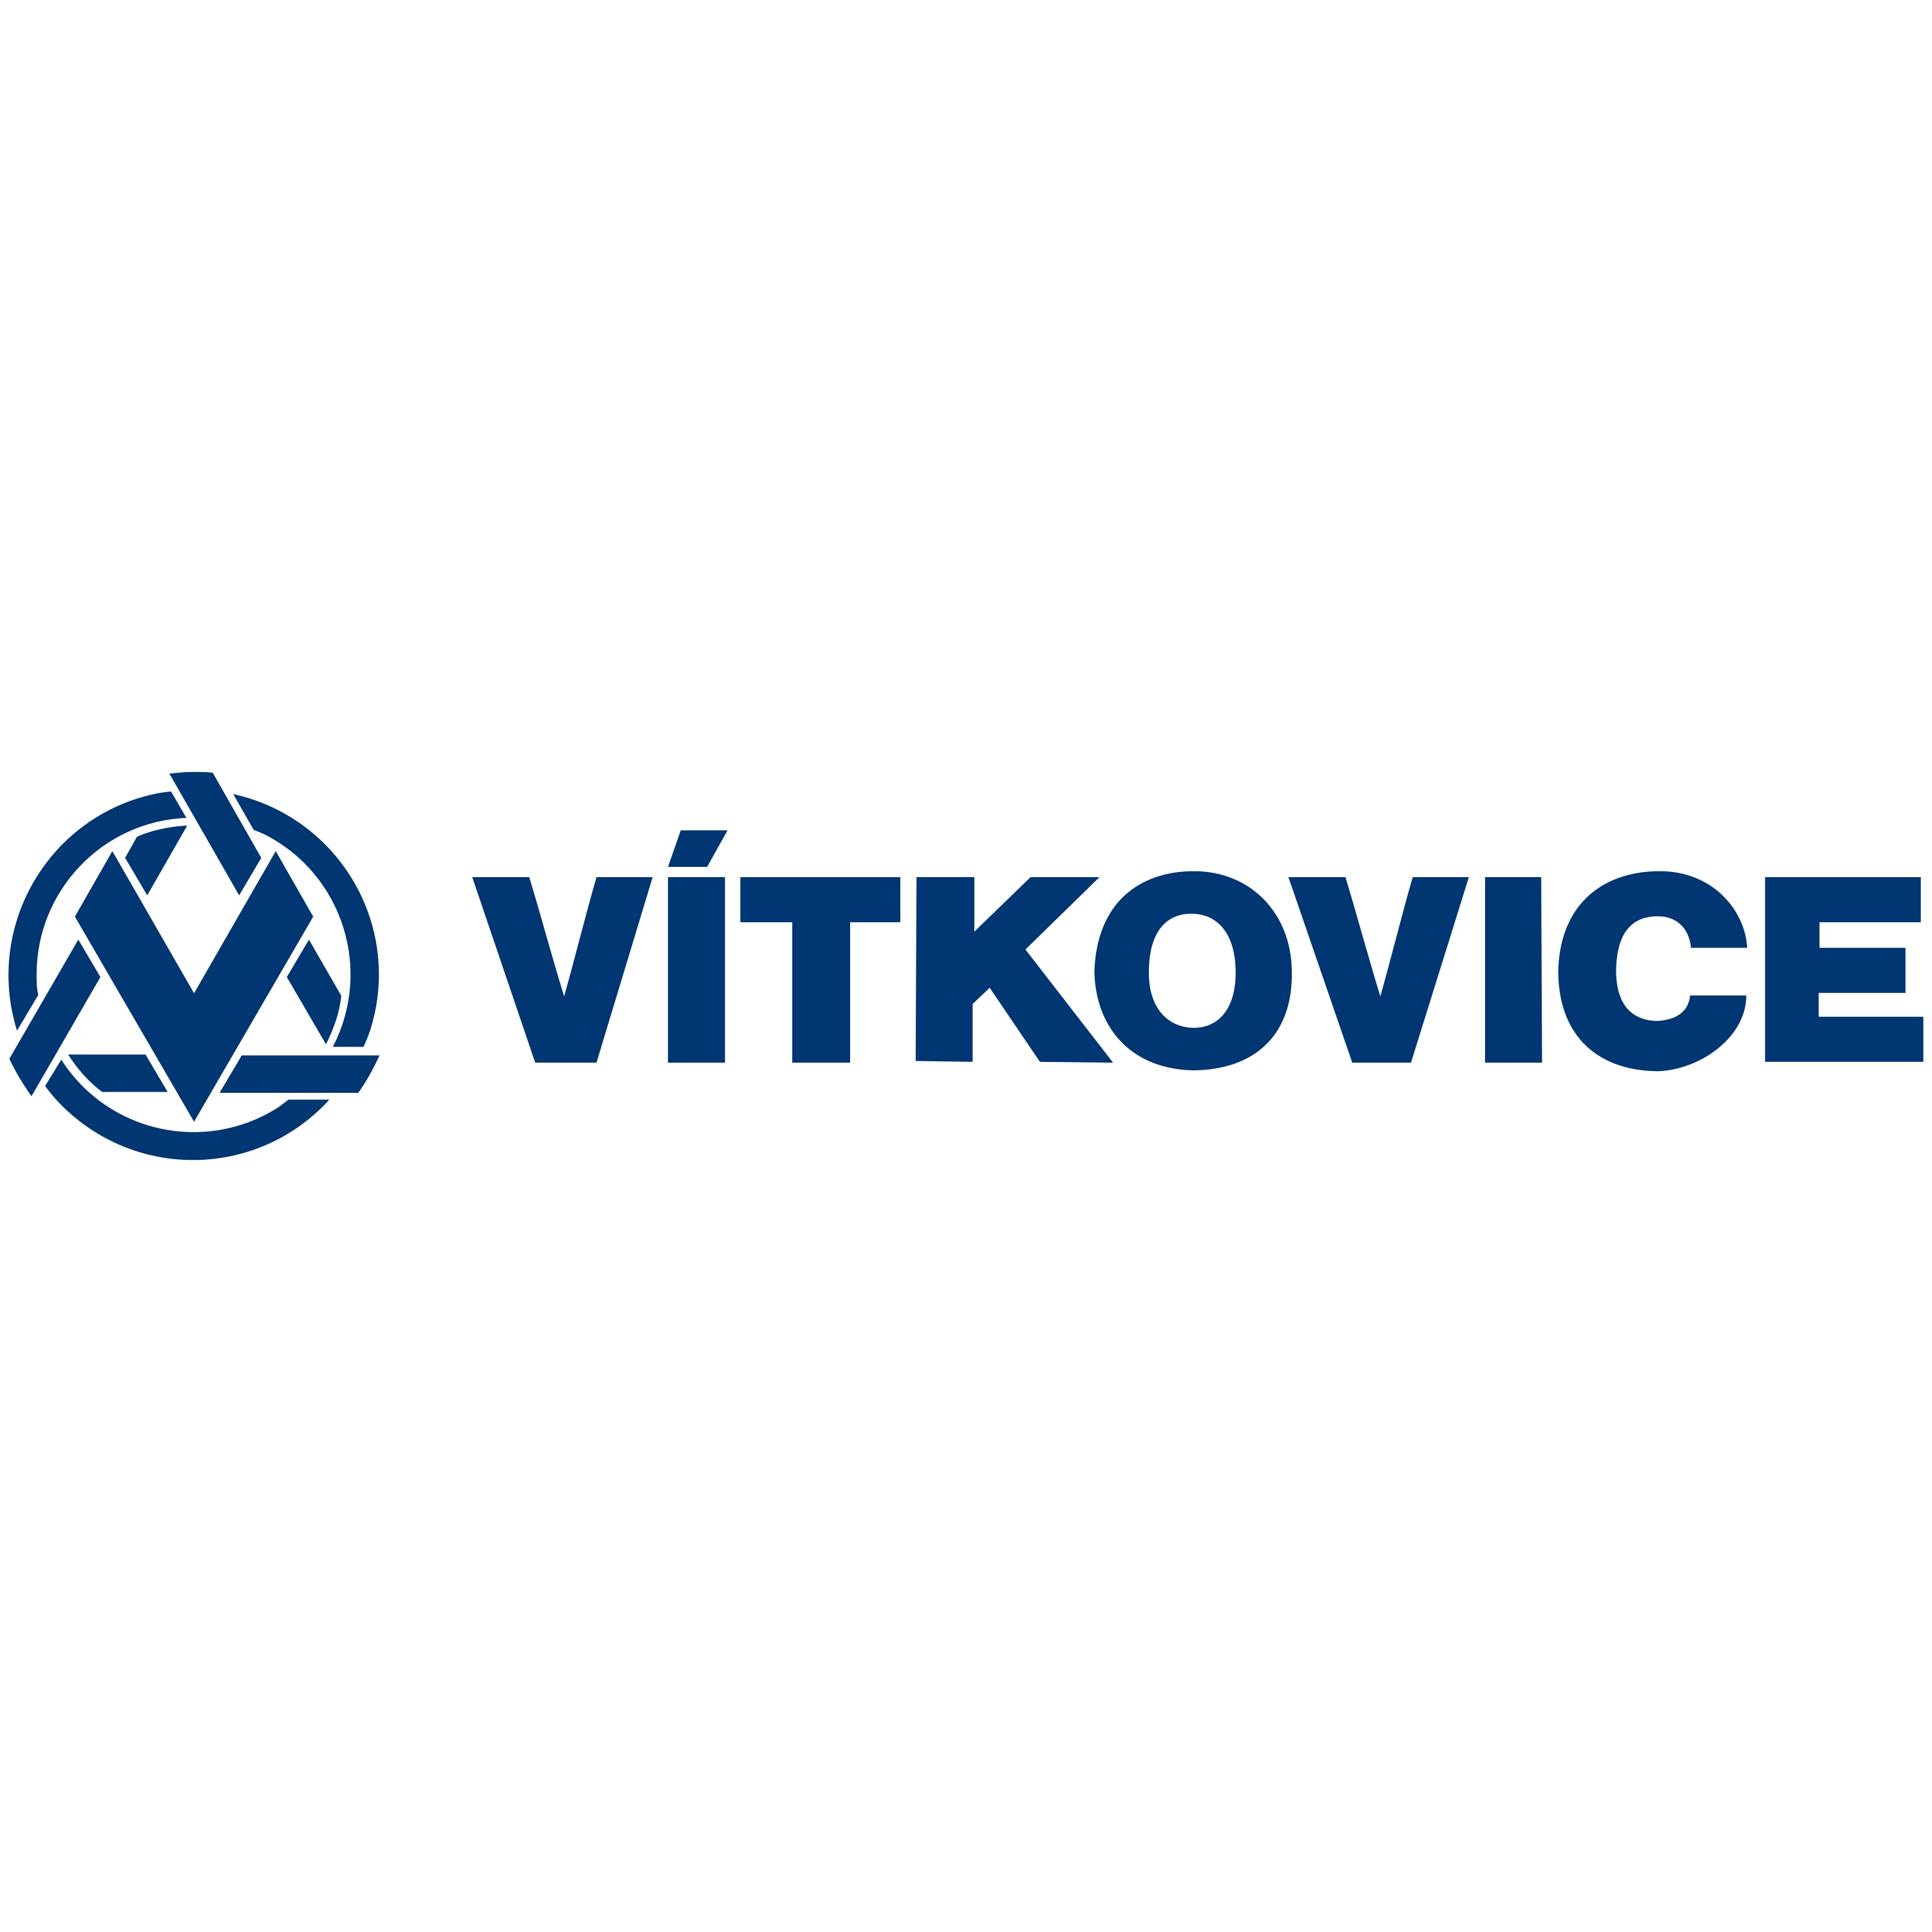 Vitkovice Logo  Transparent Image